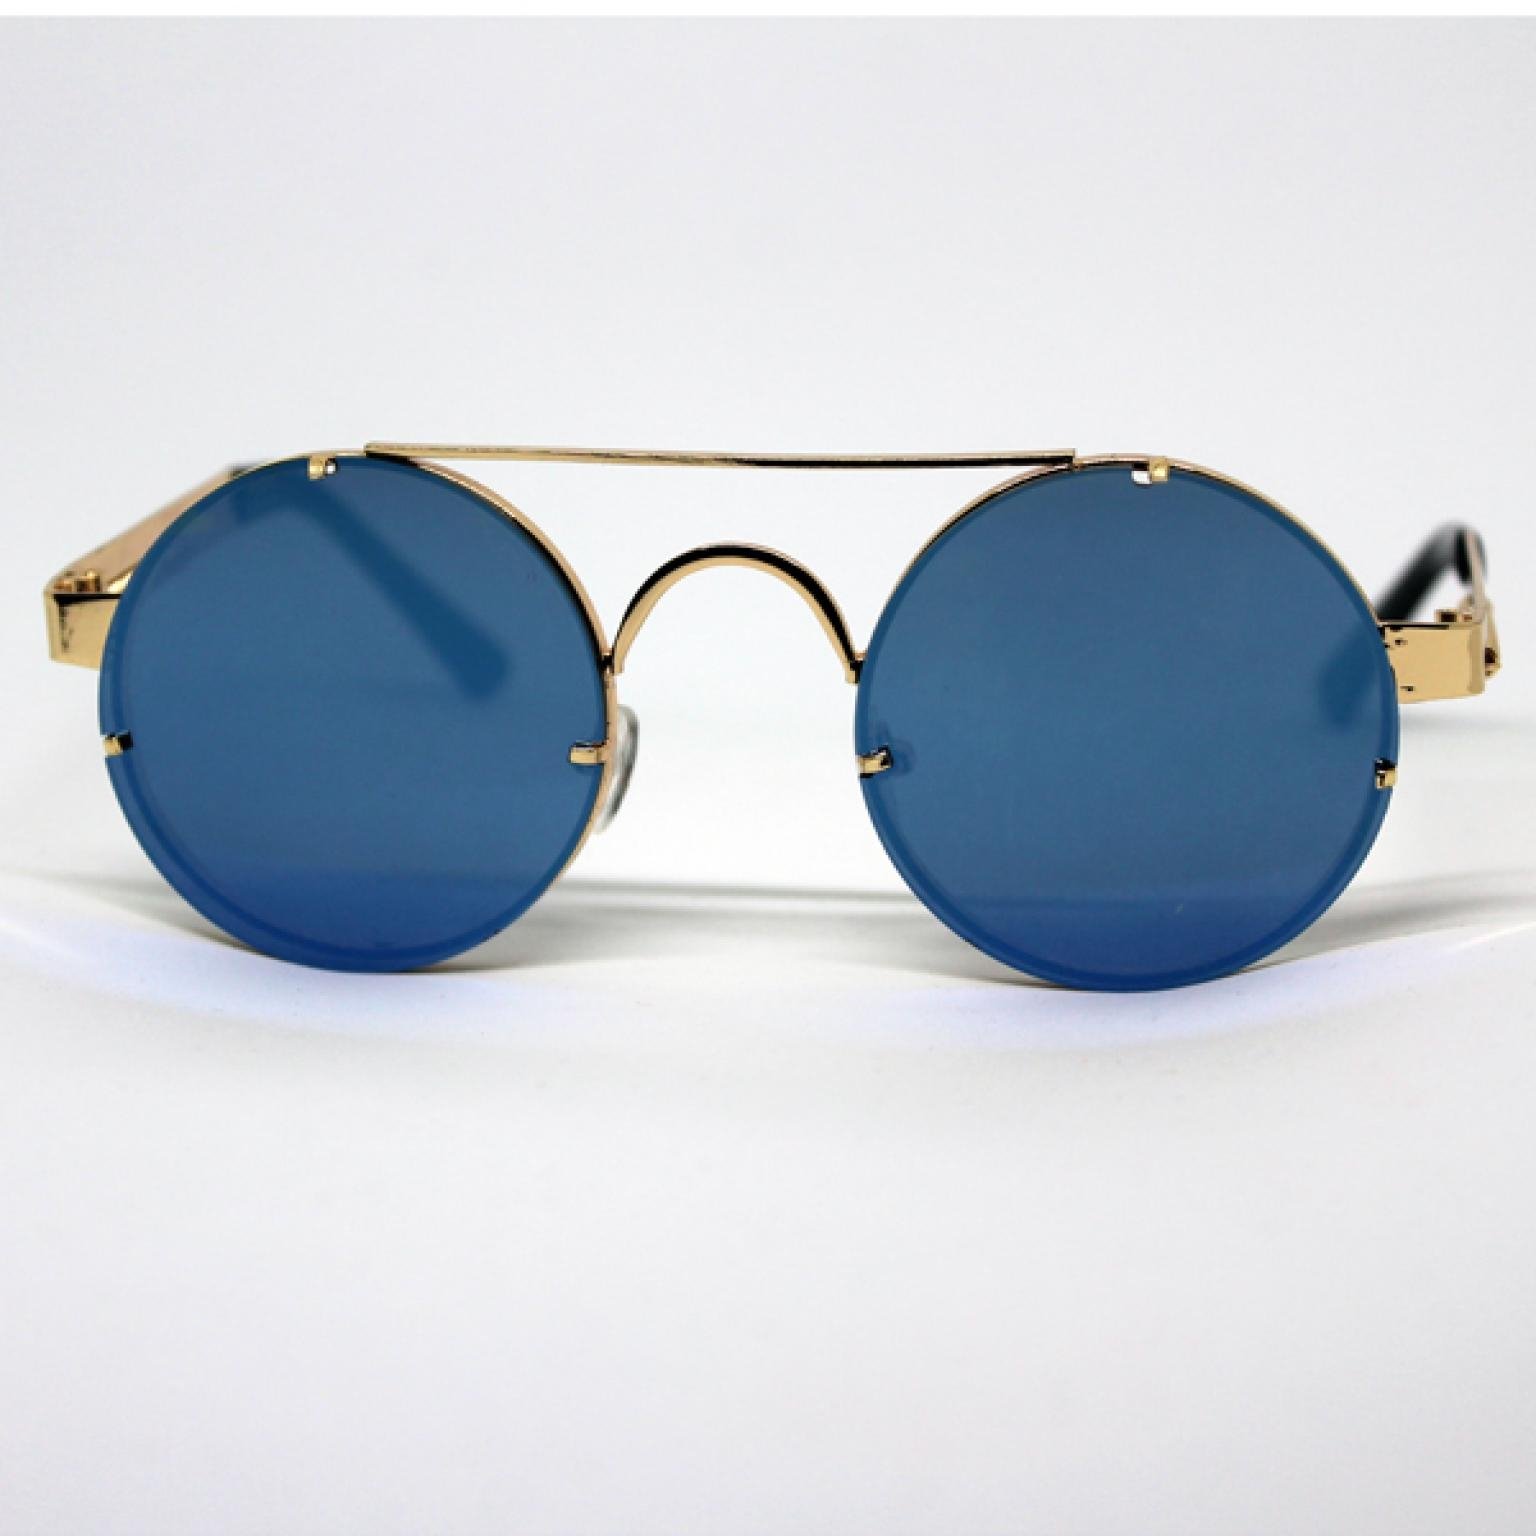 Unisex Classic Design Blue Sunglass For Men Women UV400 |SGM-52|